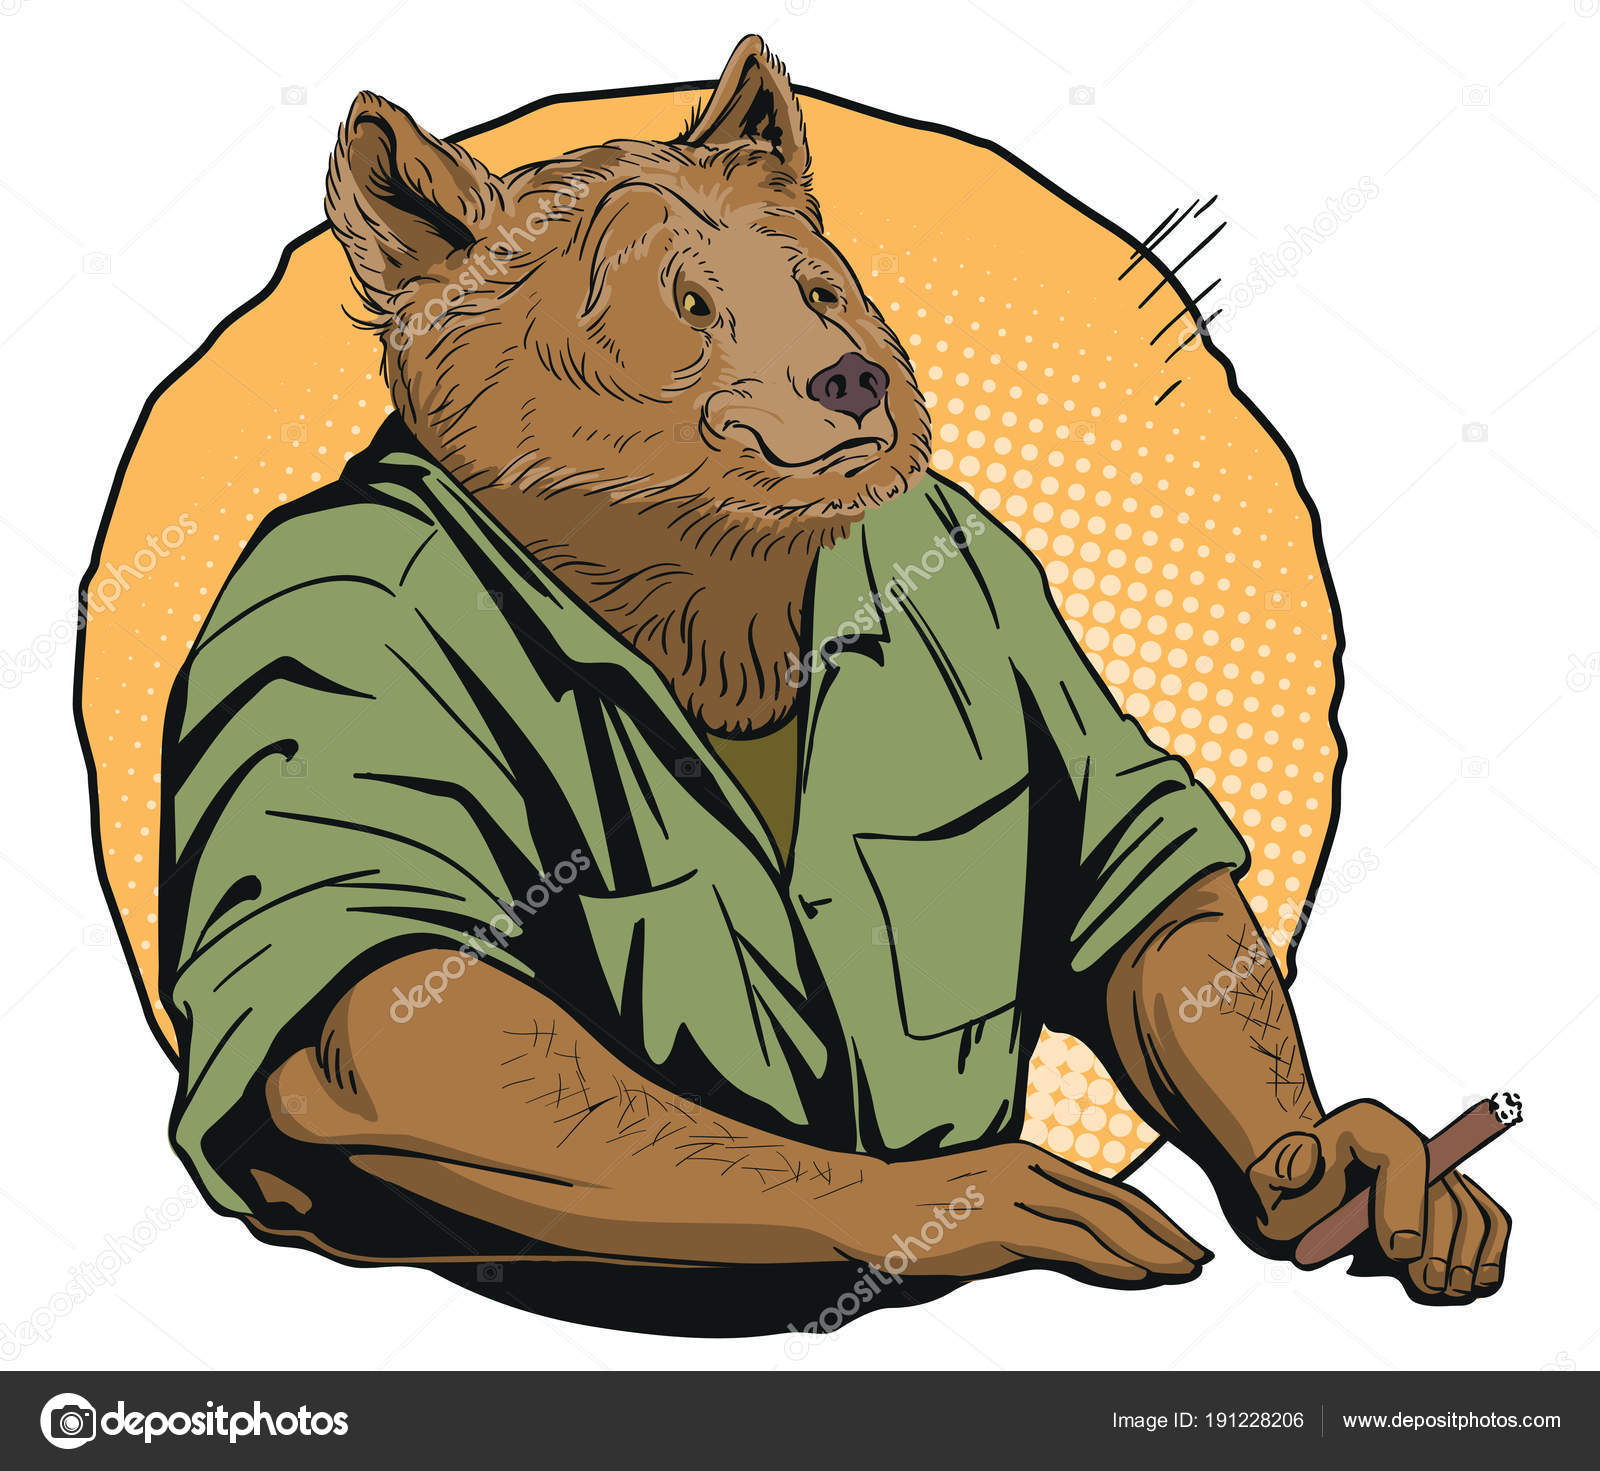 https://st3.depositphotos.com/1007018/19122/v/1600/depositphotos_191228206-stock-illustration-confident-cool-man-bear-with.jpg